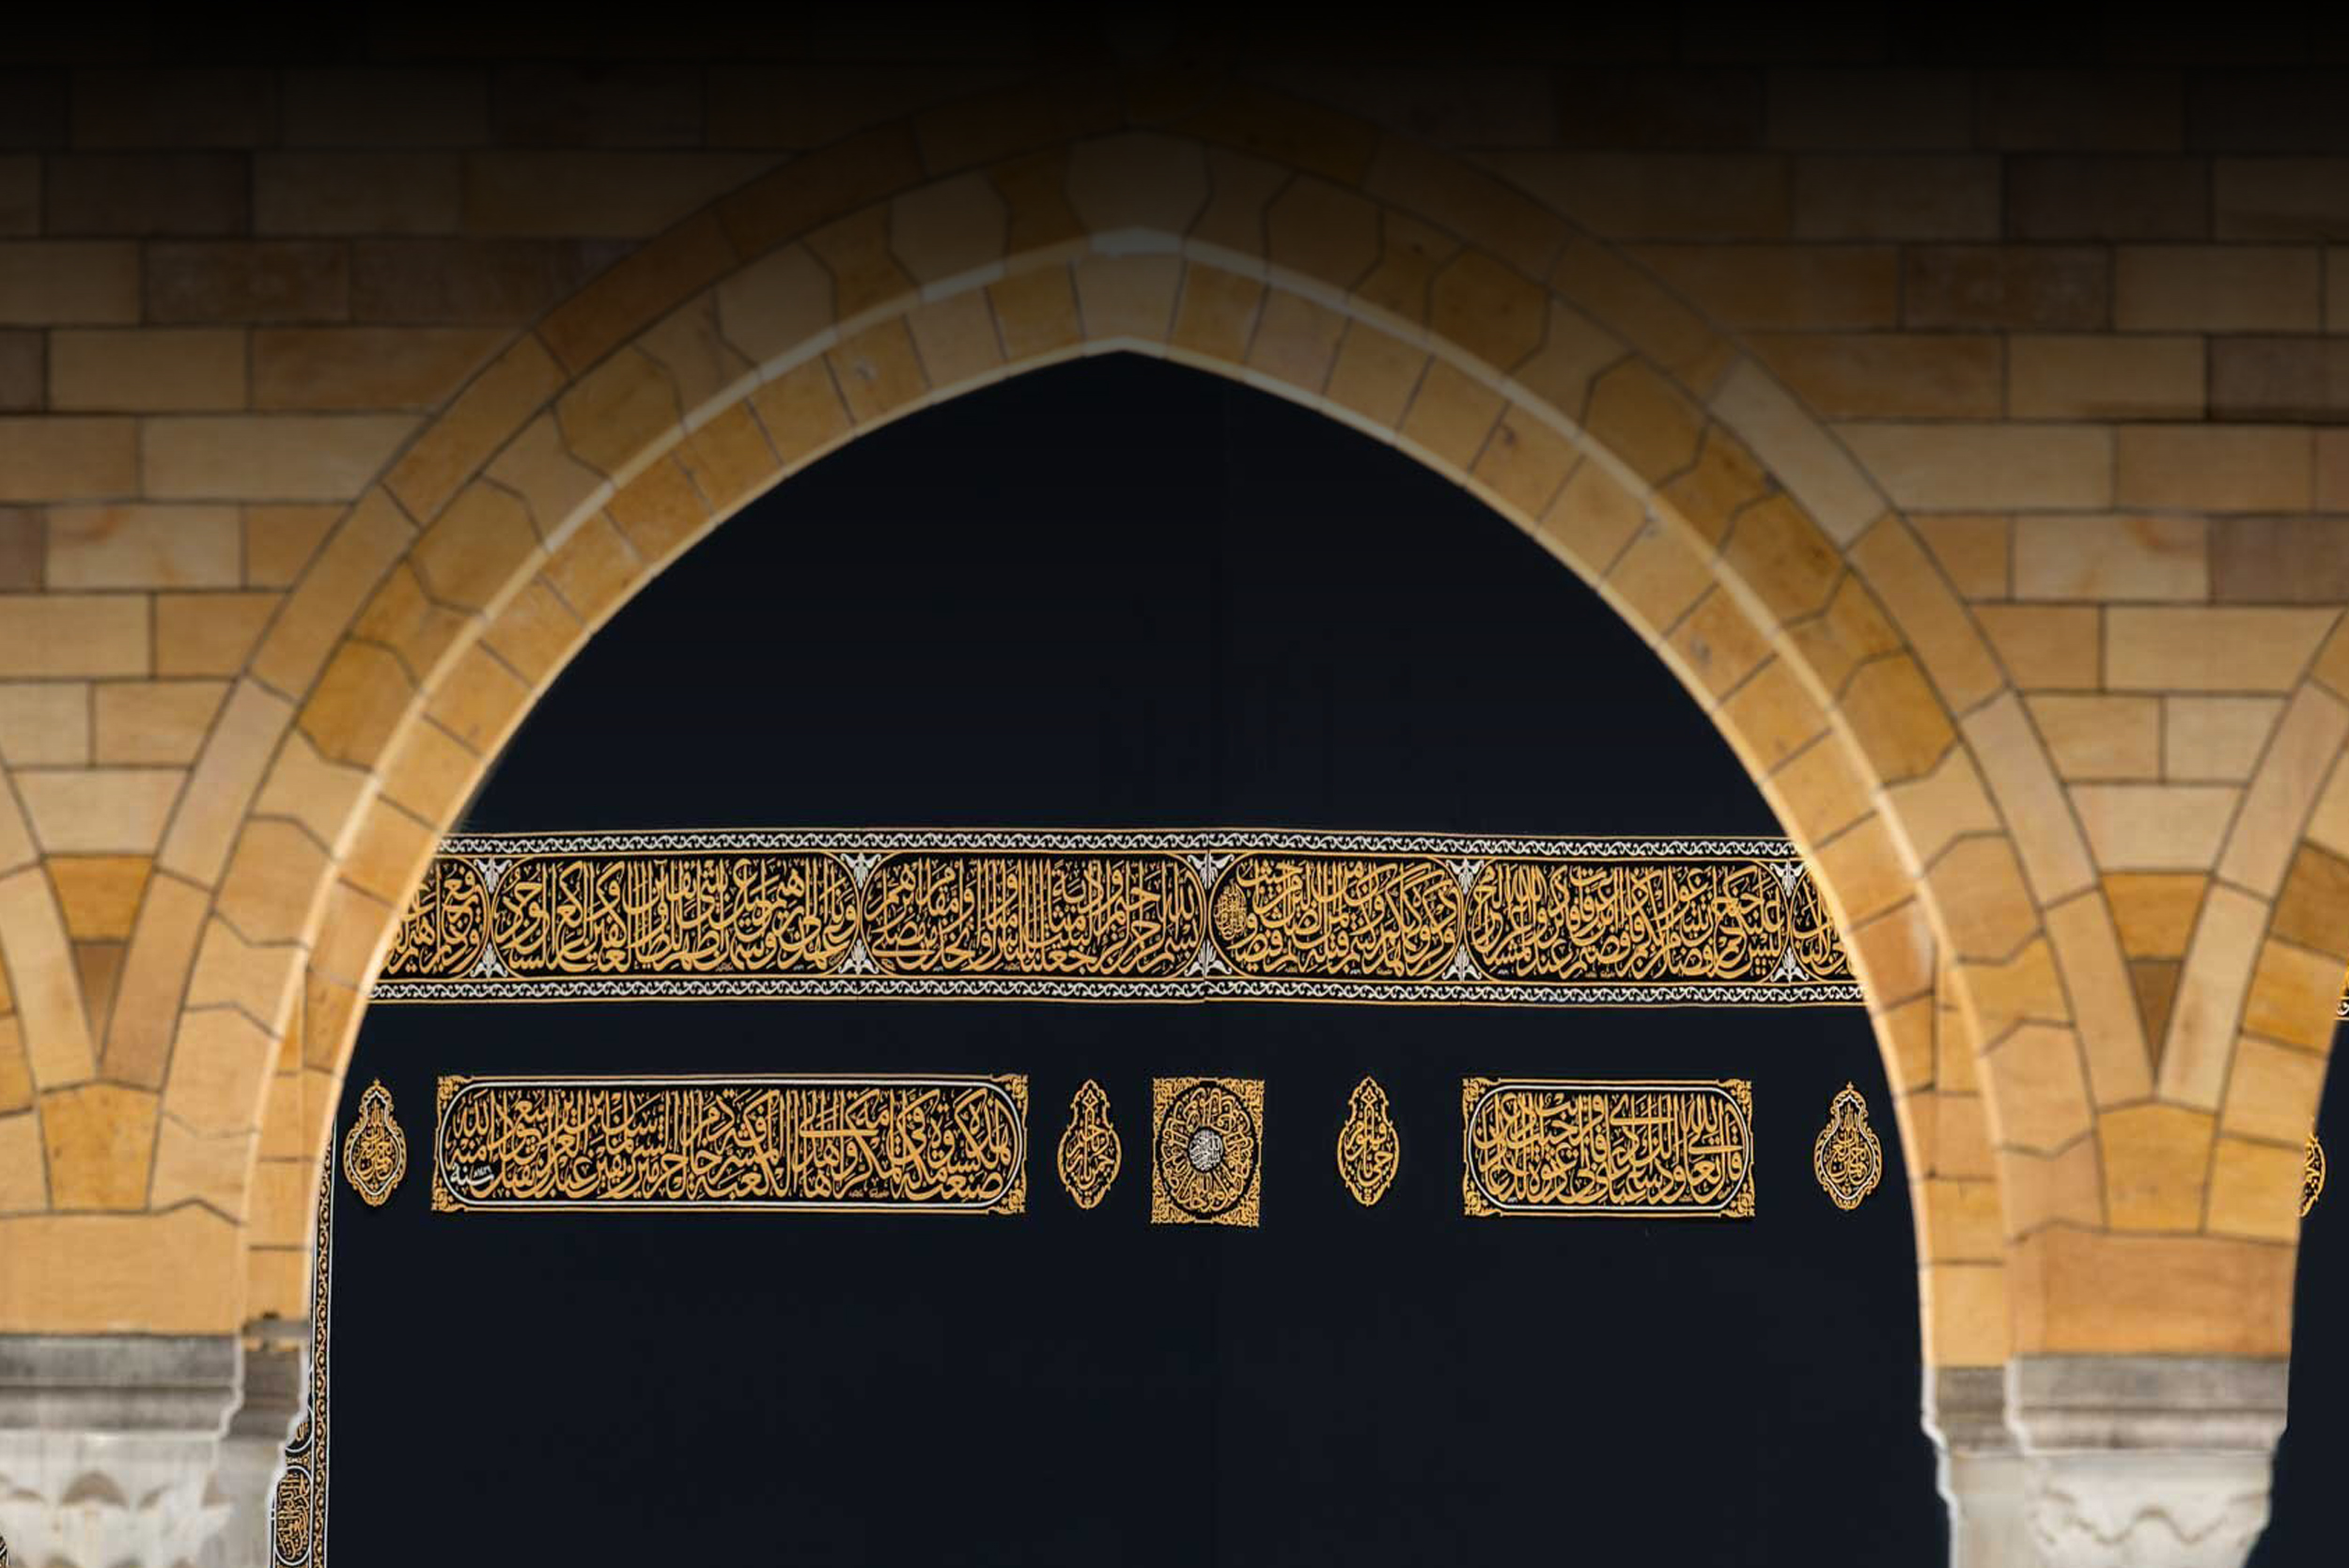 Salawat by Imam Ahmad Mashhur al Haddad